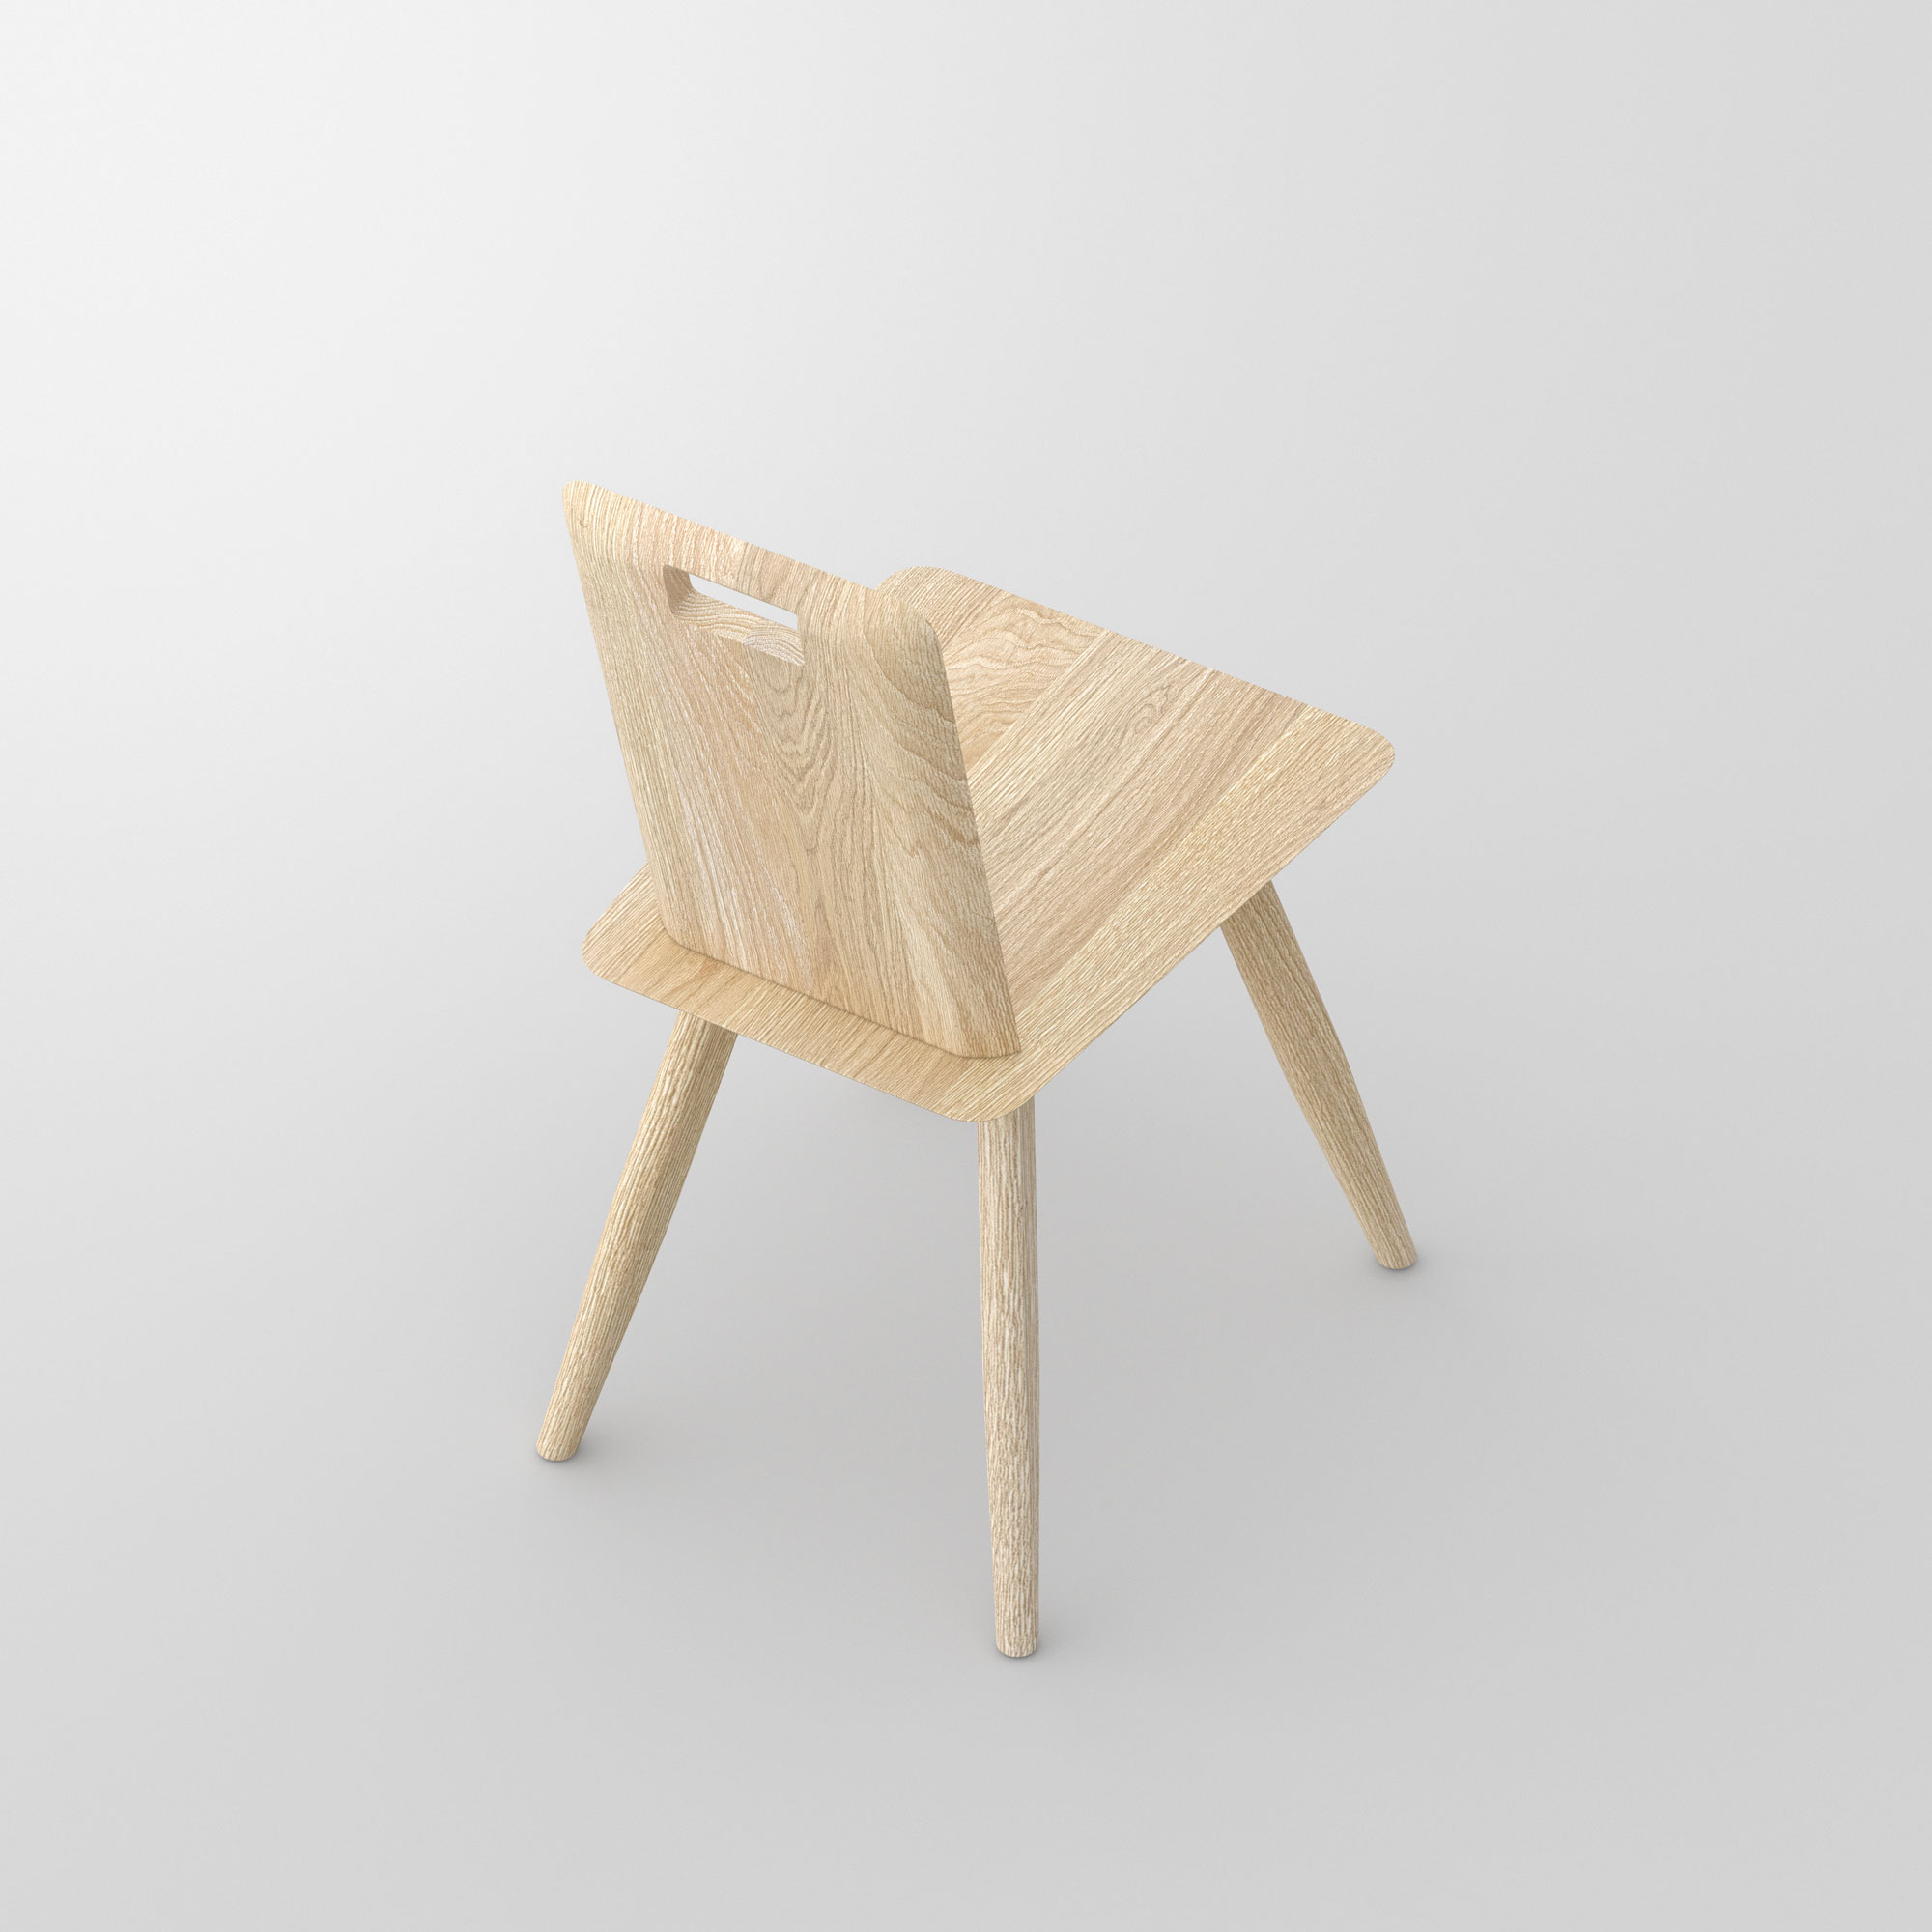 Designer Chair AETAS vitamin-design custom made in solid wood by vitamin design